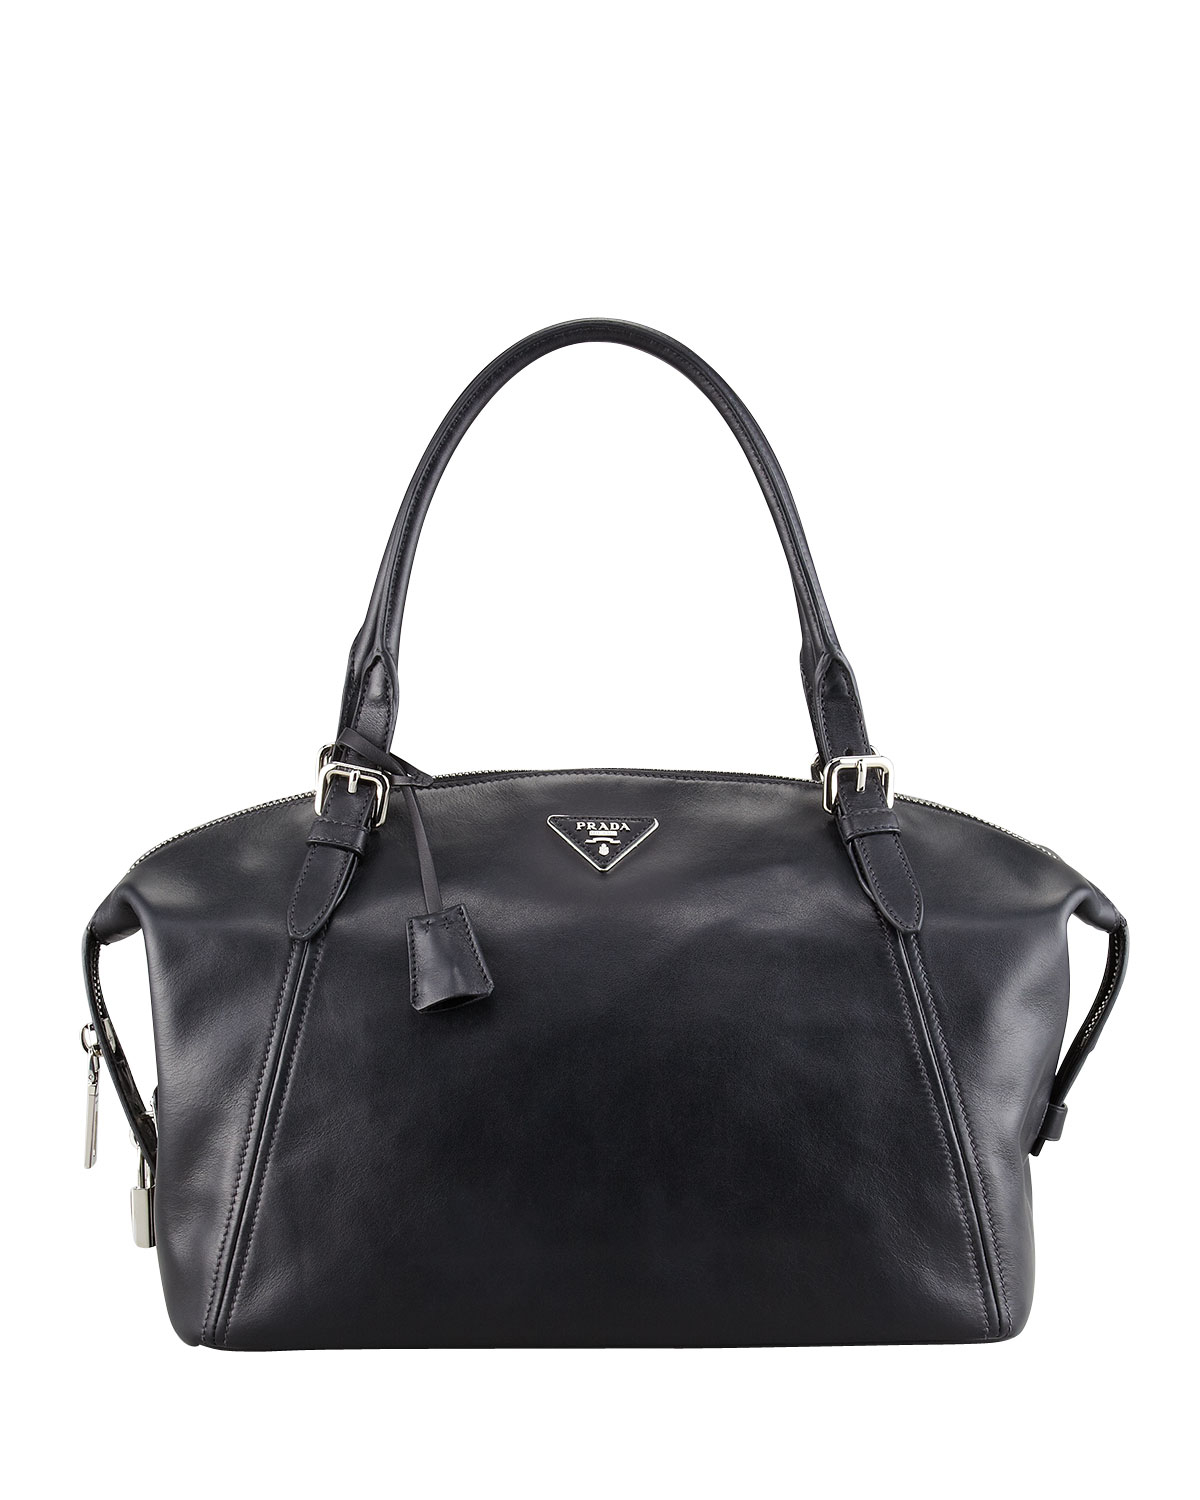 Prada Soft Calfskin Duffle Bag in Black | Lyst  